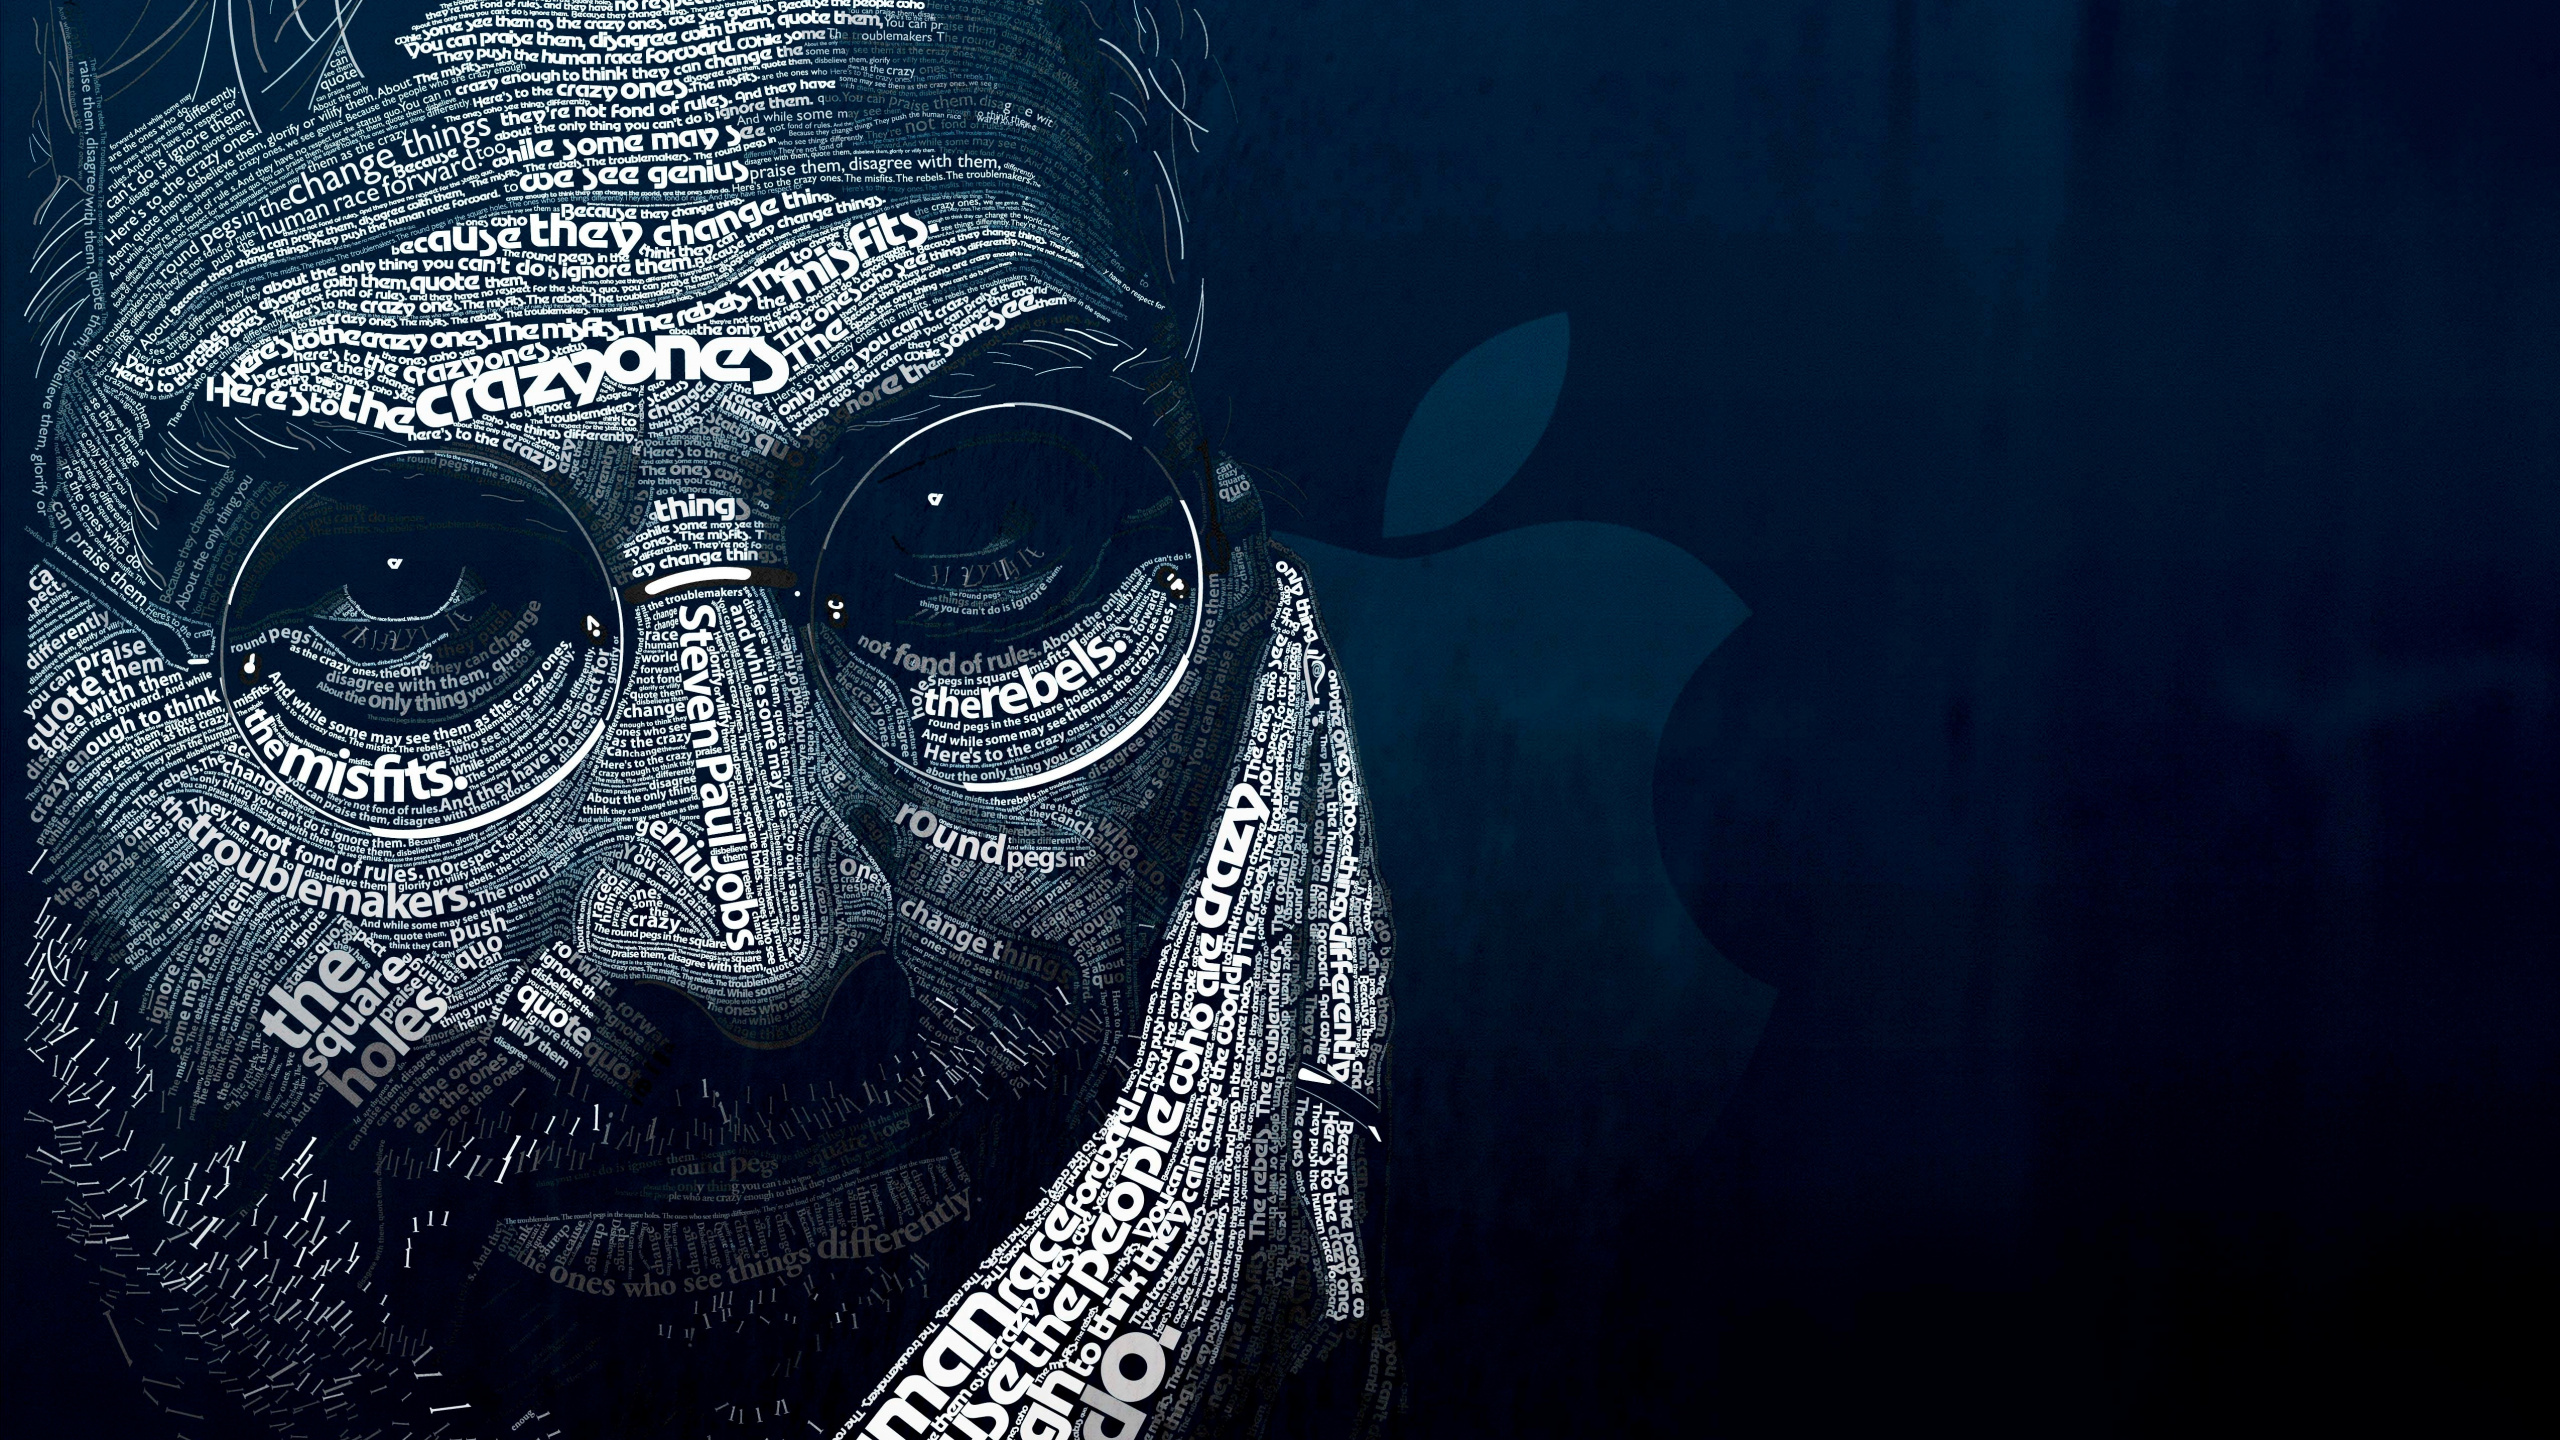 Steve Jobs, Apple, Darkness, Masque, Ipod. Wallpaper in 2560x1440 Resolution